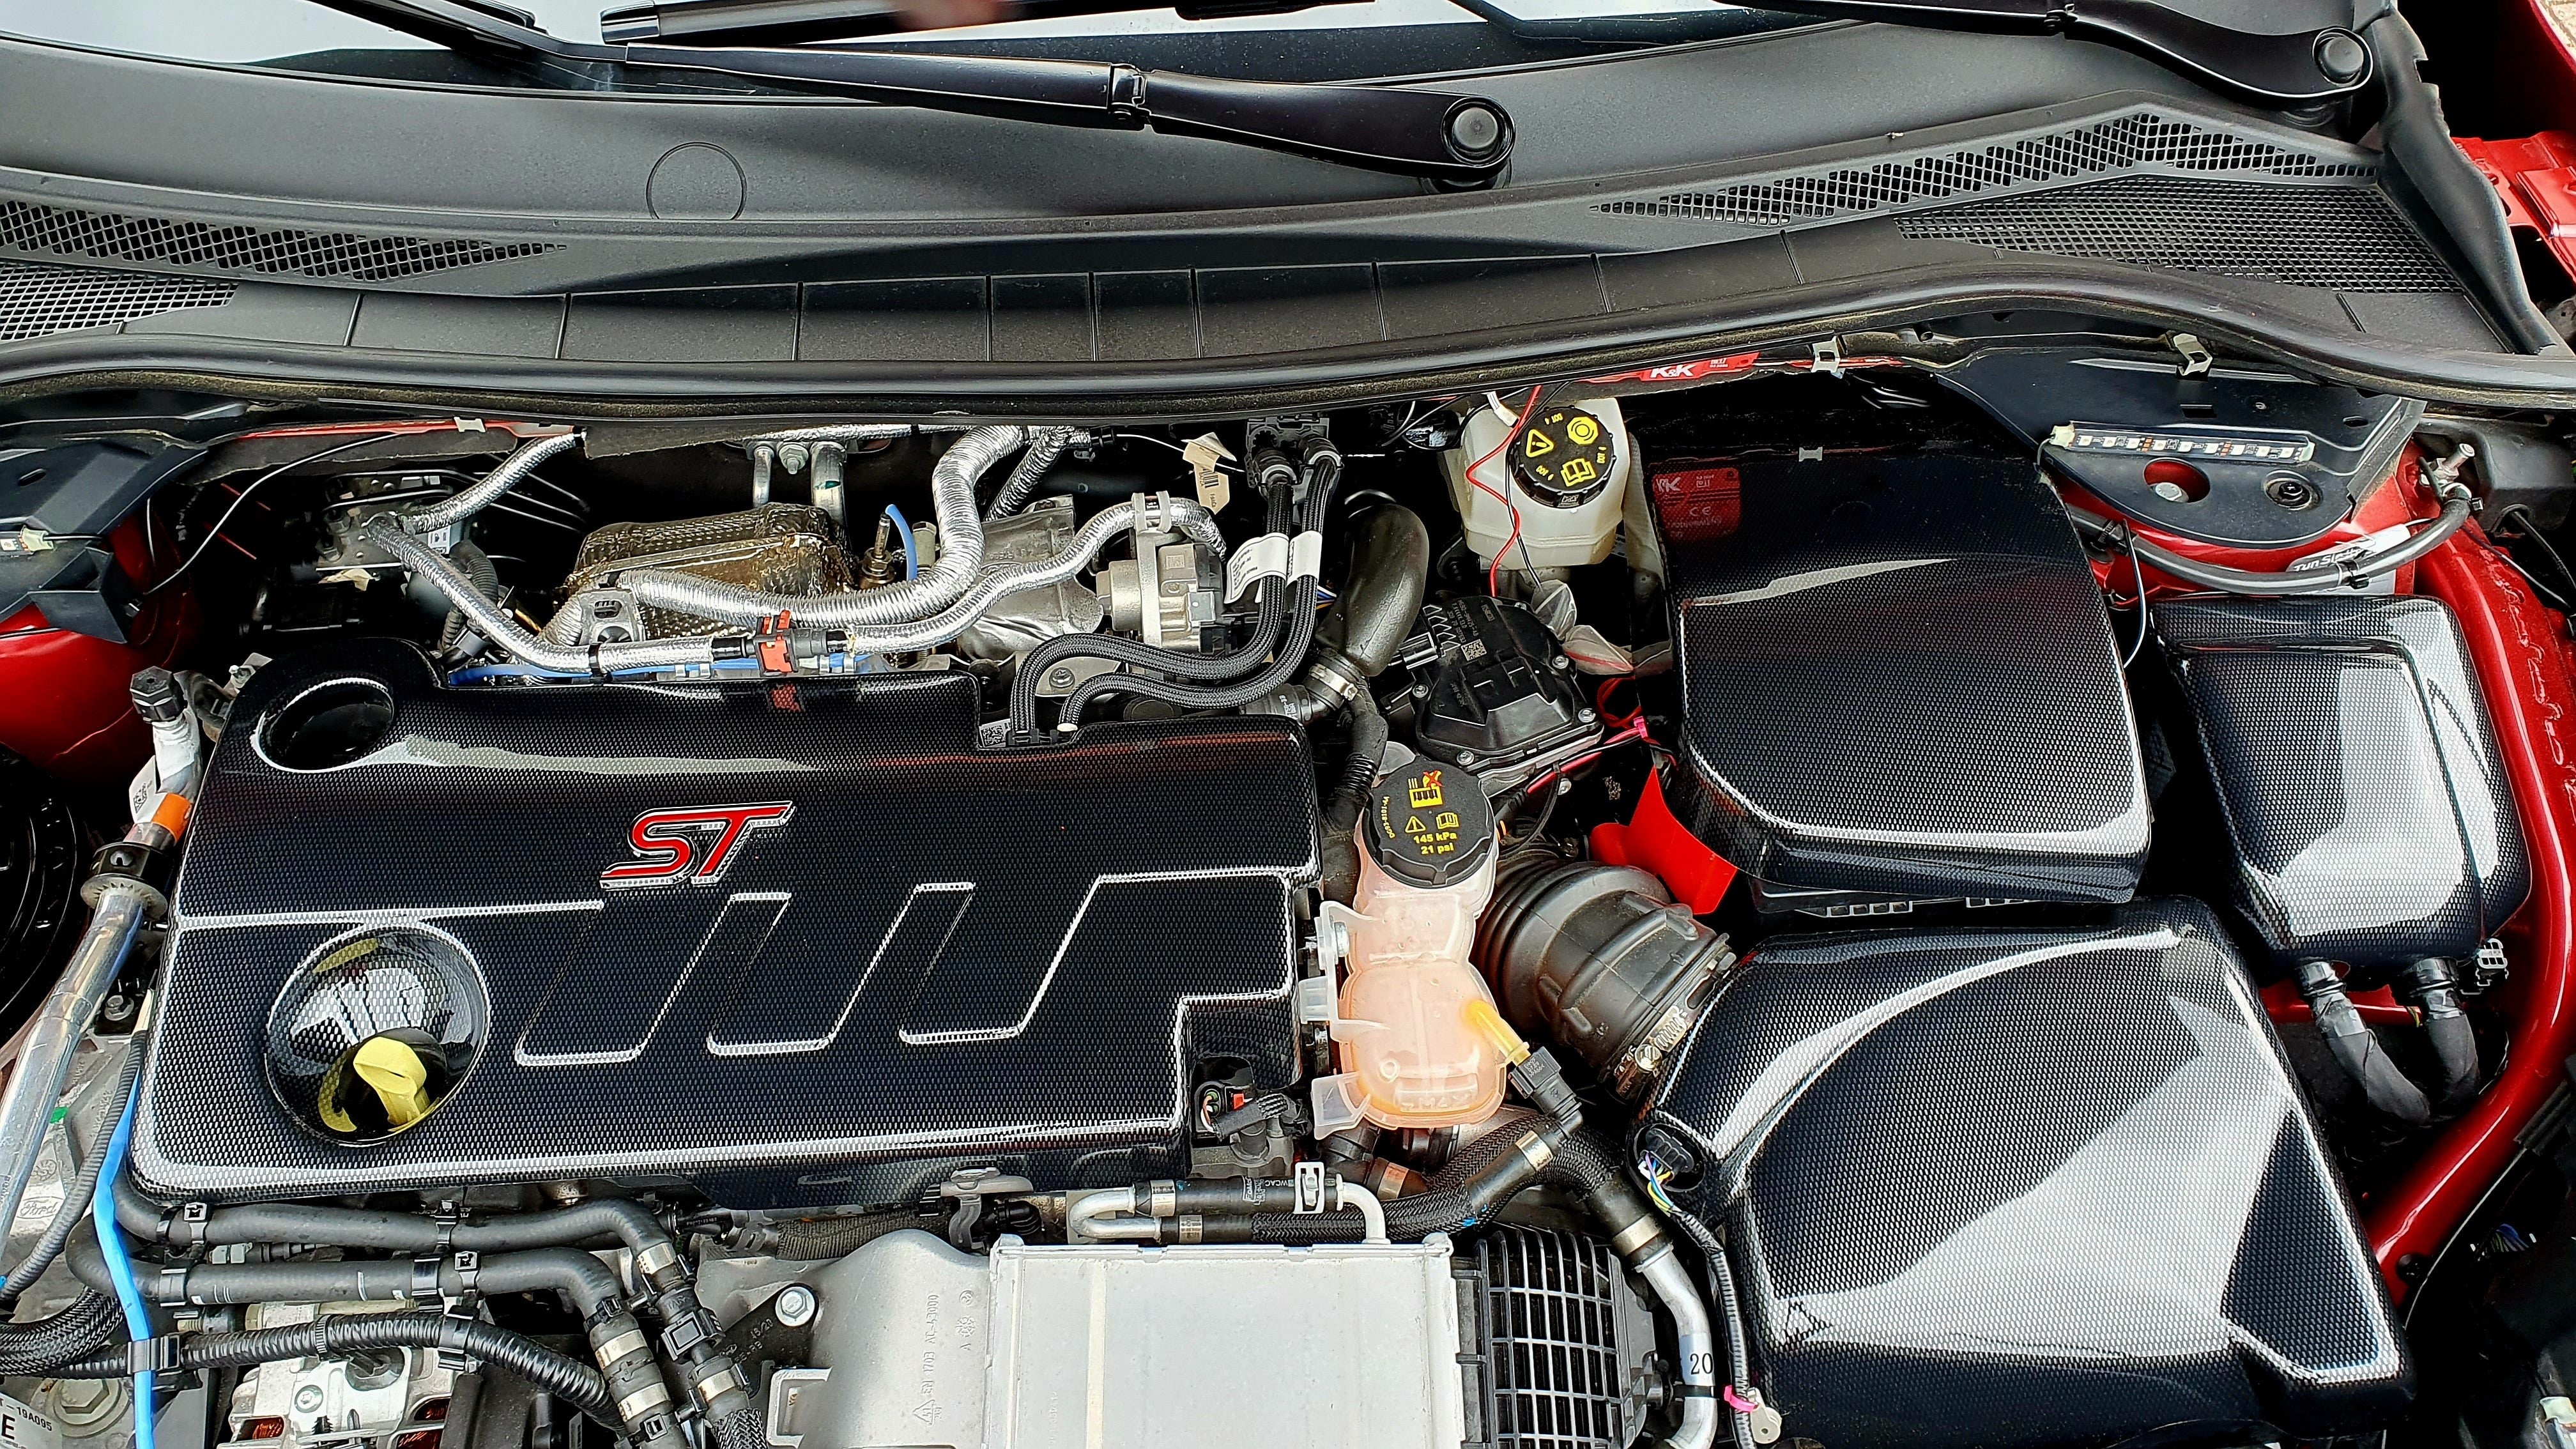 Proform Engine Cover - MK4/4.5 Focus ST Diesel (Plastic Finishes)